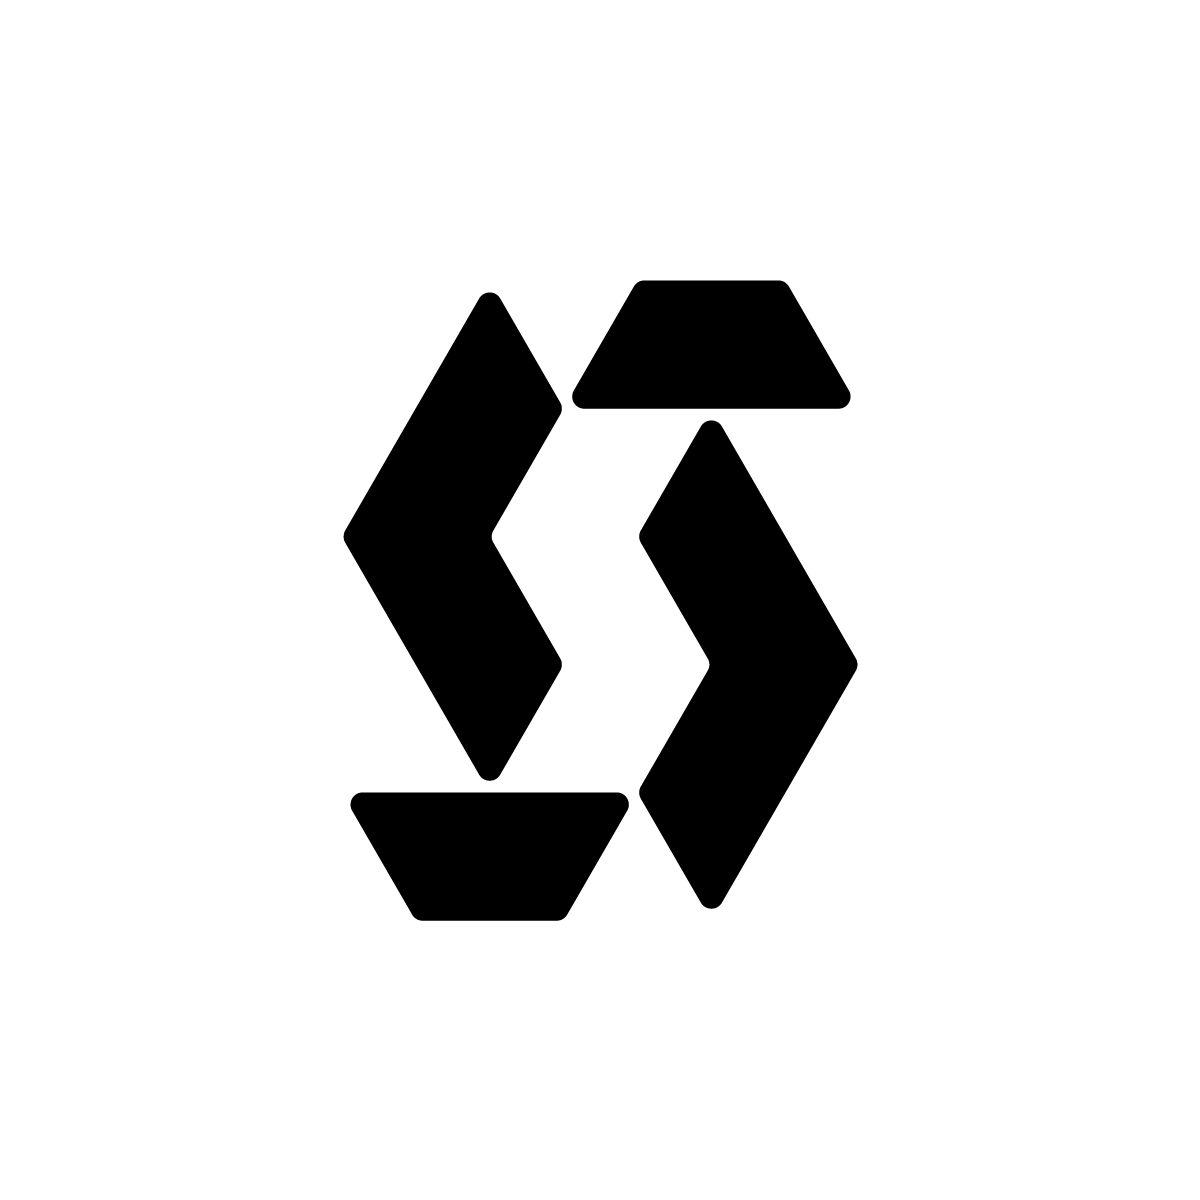 s-arrows-logo-for-sale